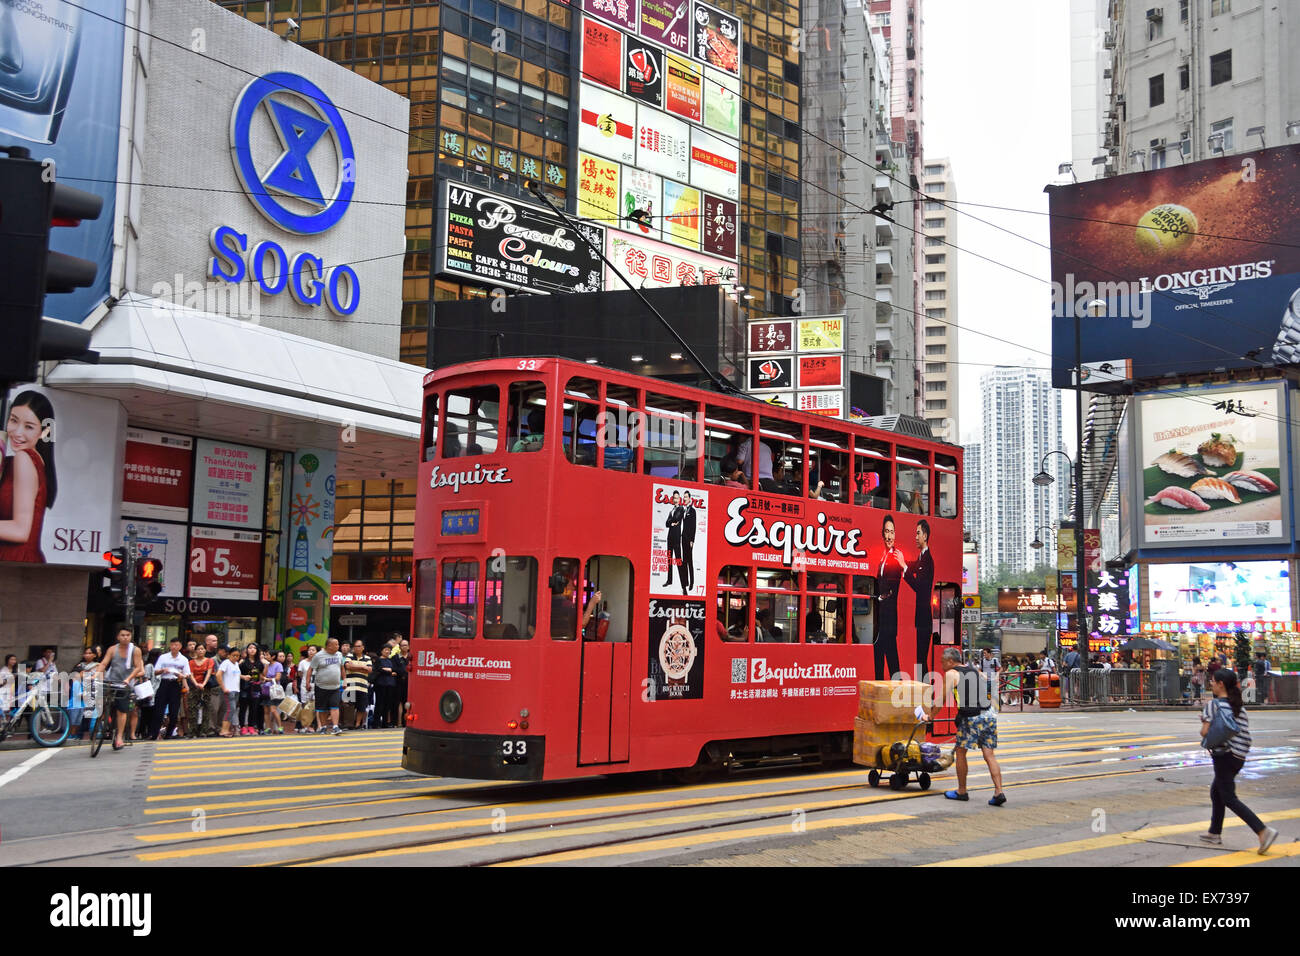 Tranvía de Doble Piso con cuerpo de tranvía publicidad Hong Kong China ( ocupado la isla de Hong Kong ) Foto de stock